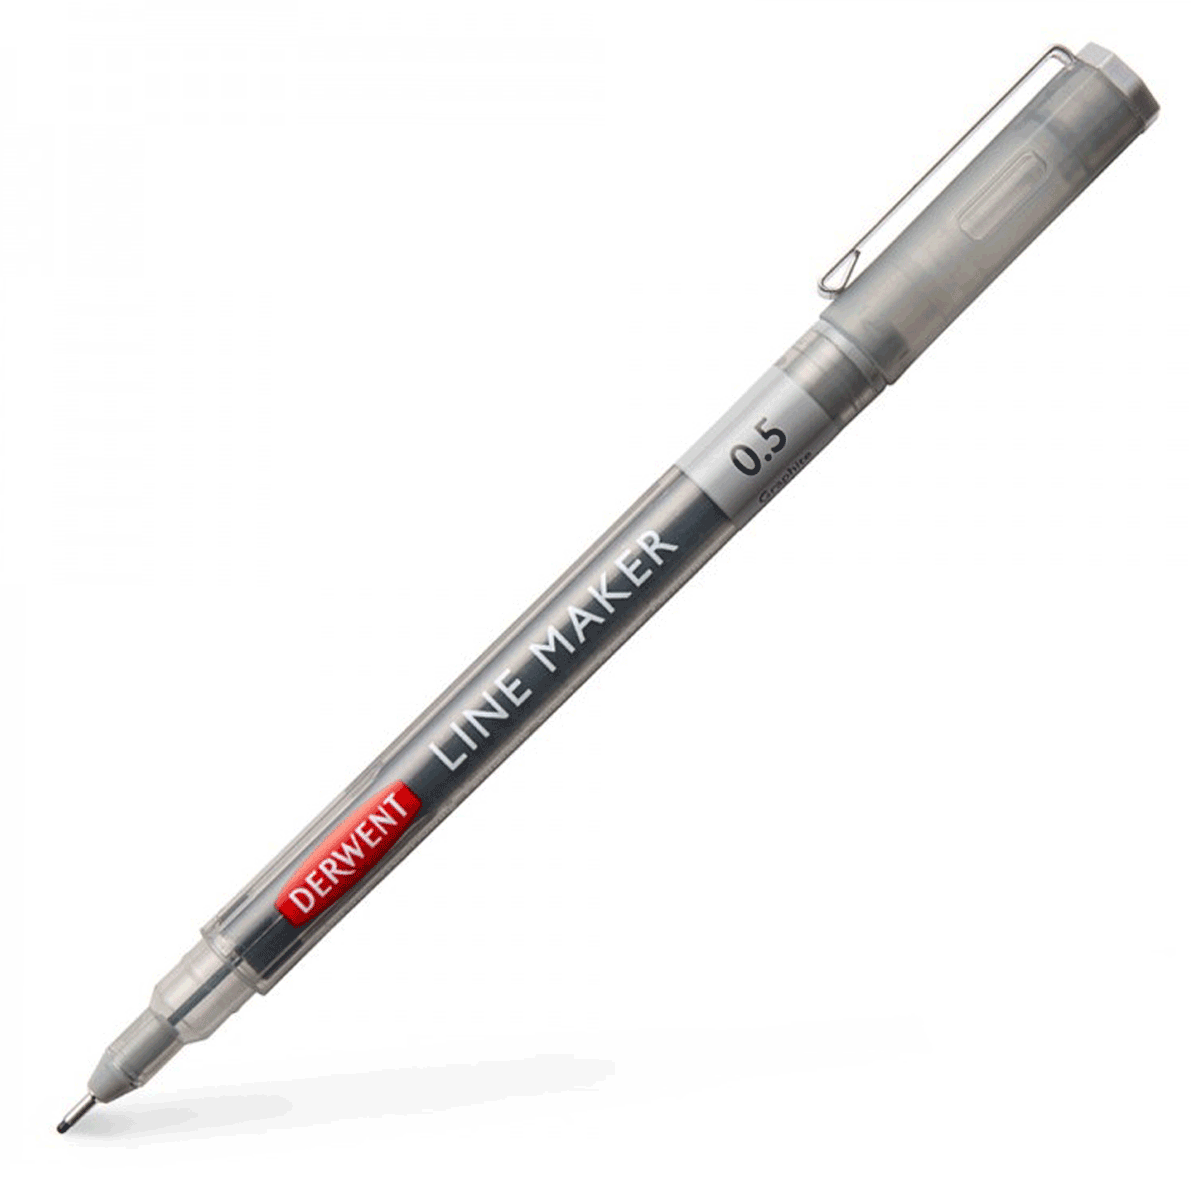 Derwent Graphik Line Maker Pen - Graphite 0.5